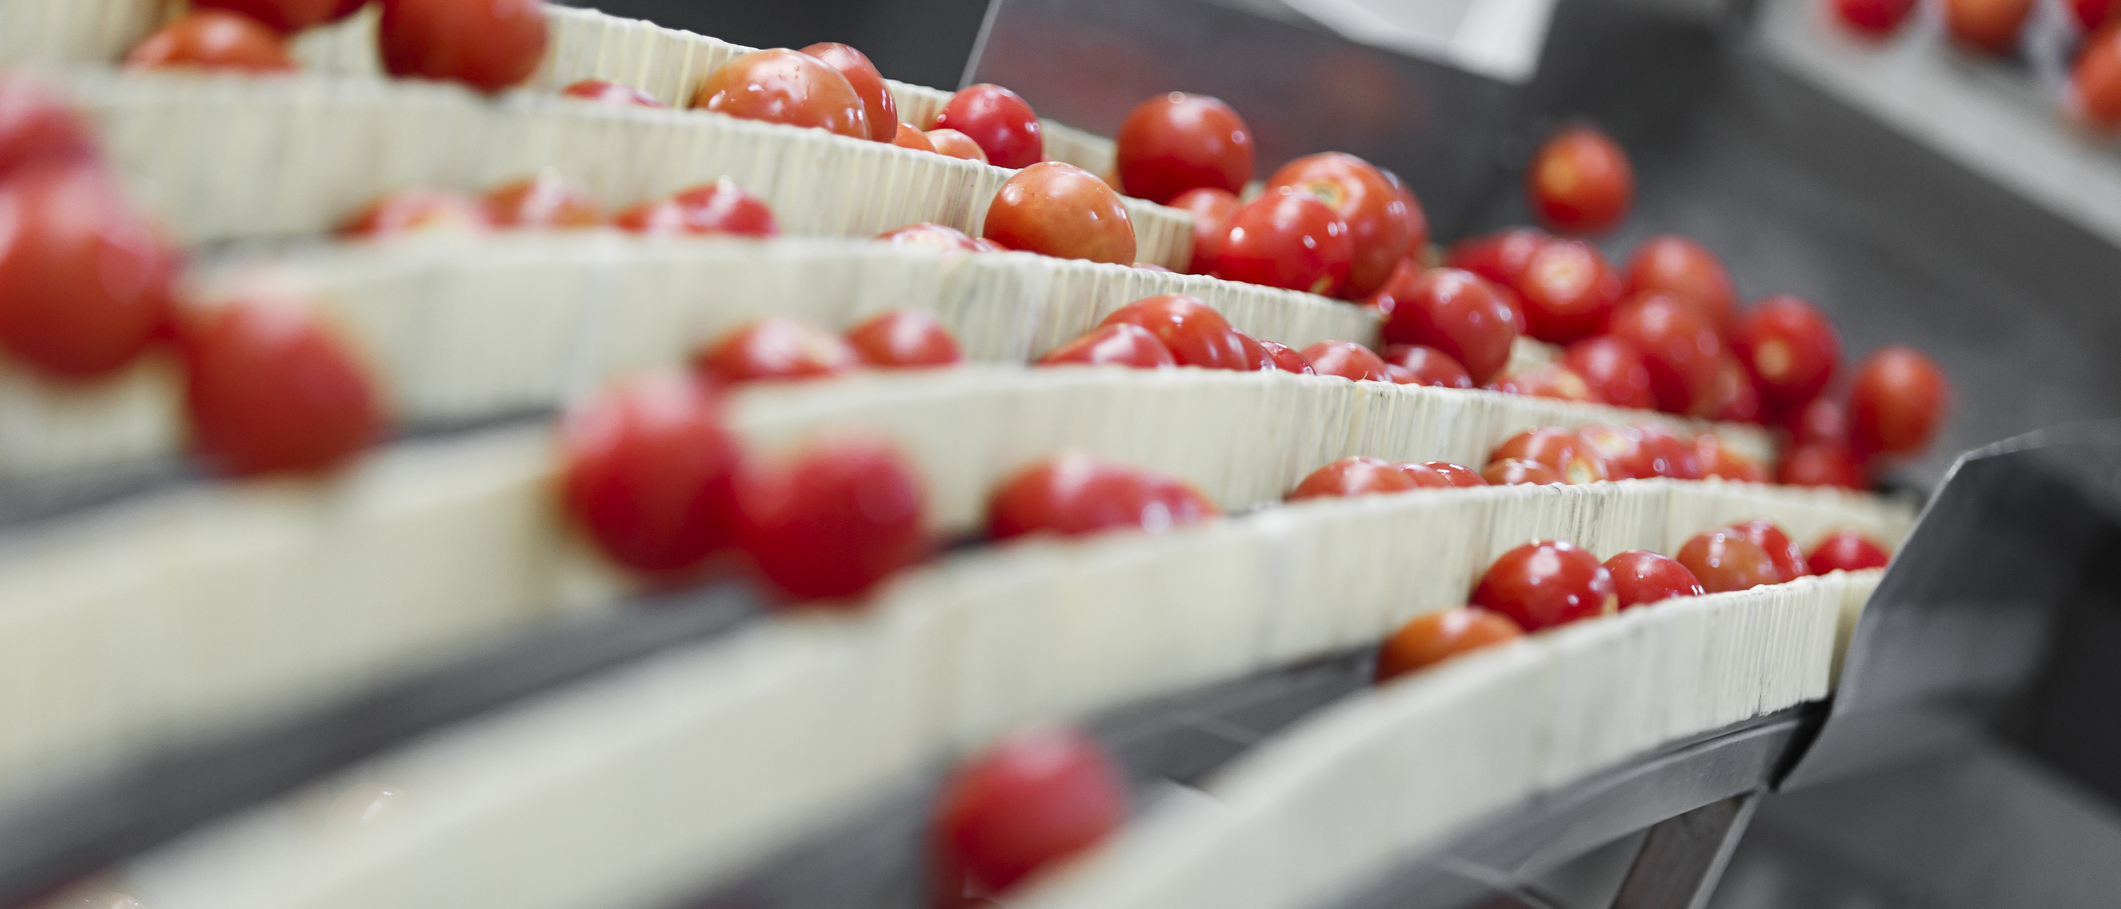 tomatoes on a conveyor belt.